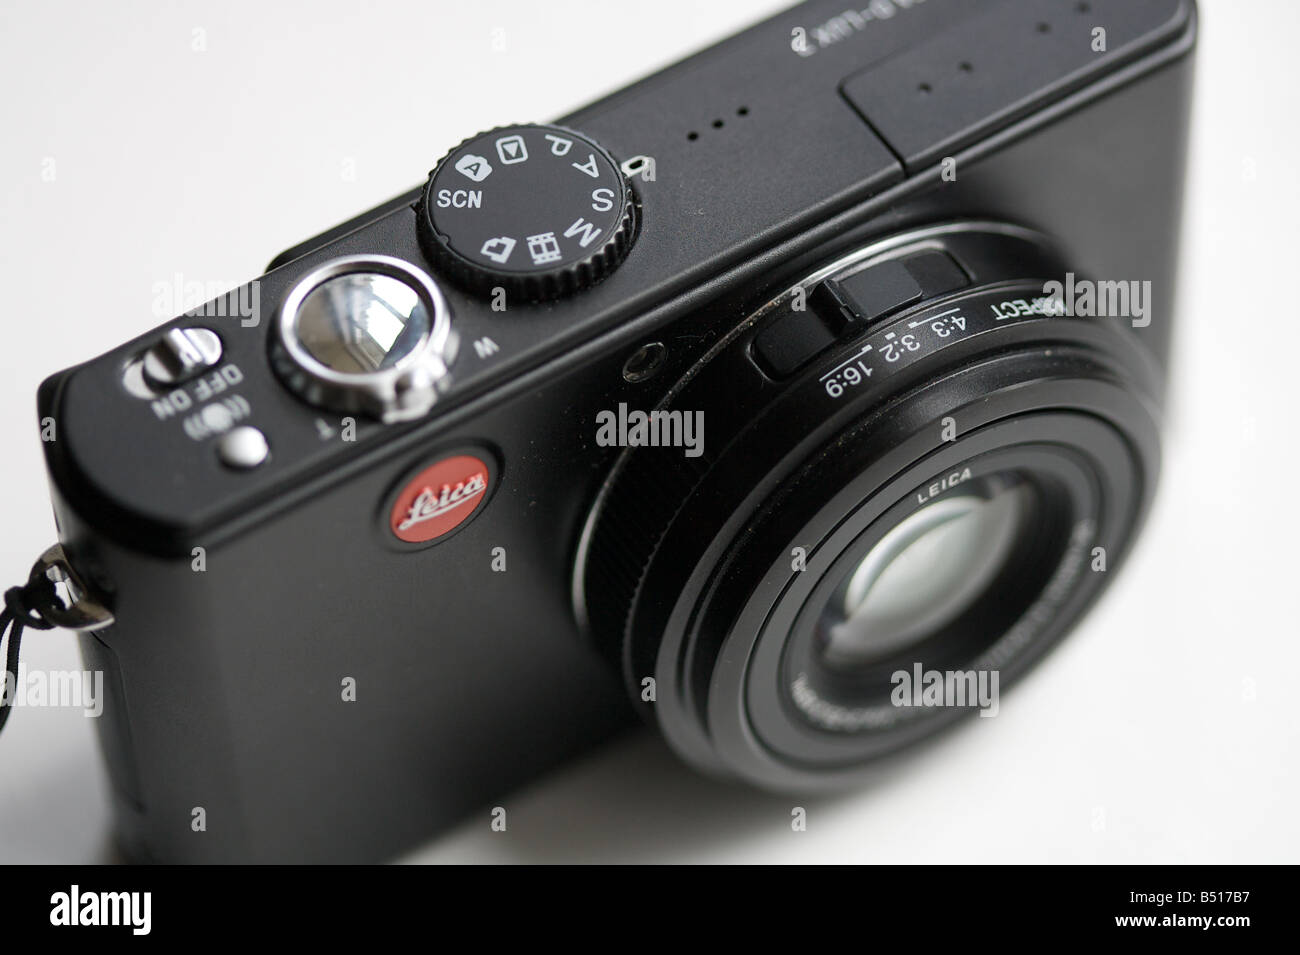 Leica D-LUX 3 camera Stock Photo